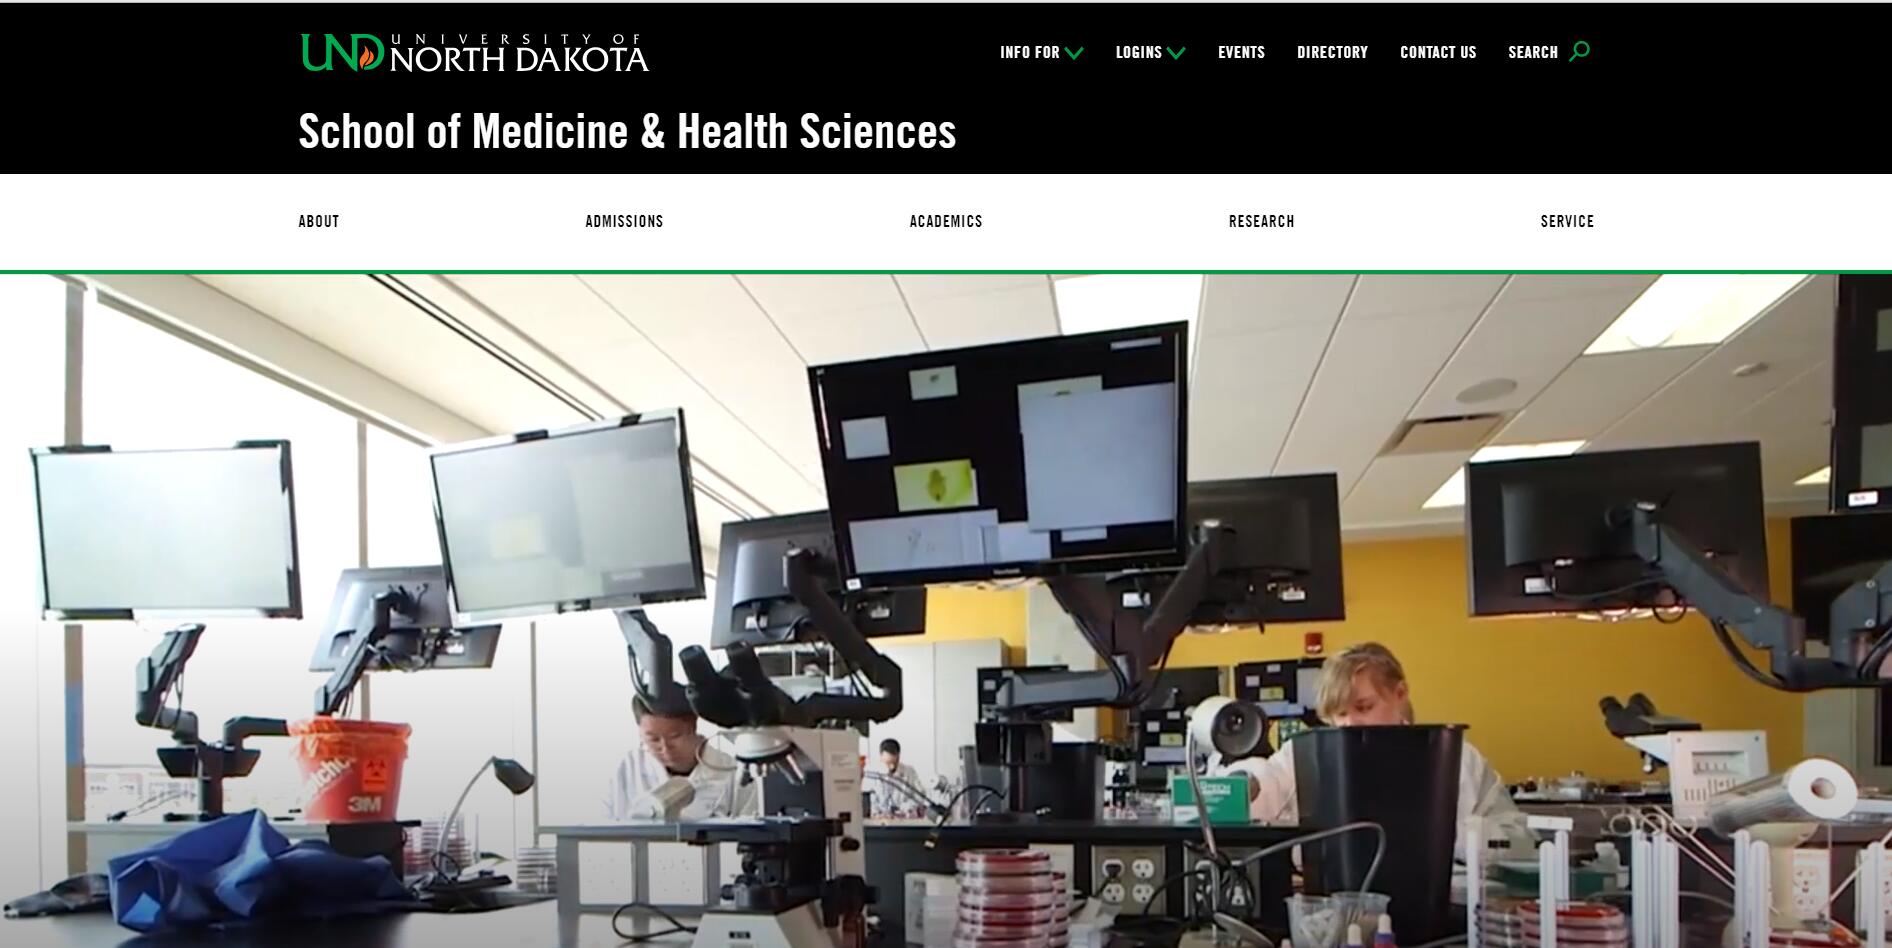 The School of Medicine and Health Sciences at University of North Dakota